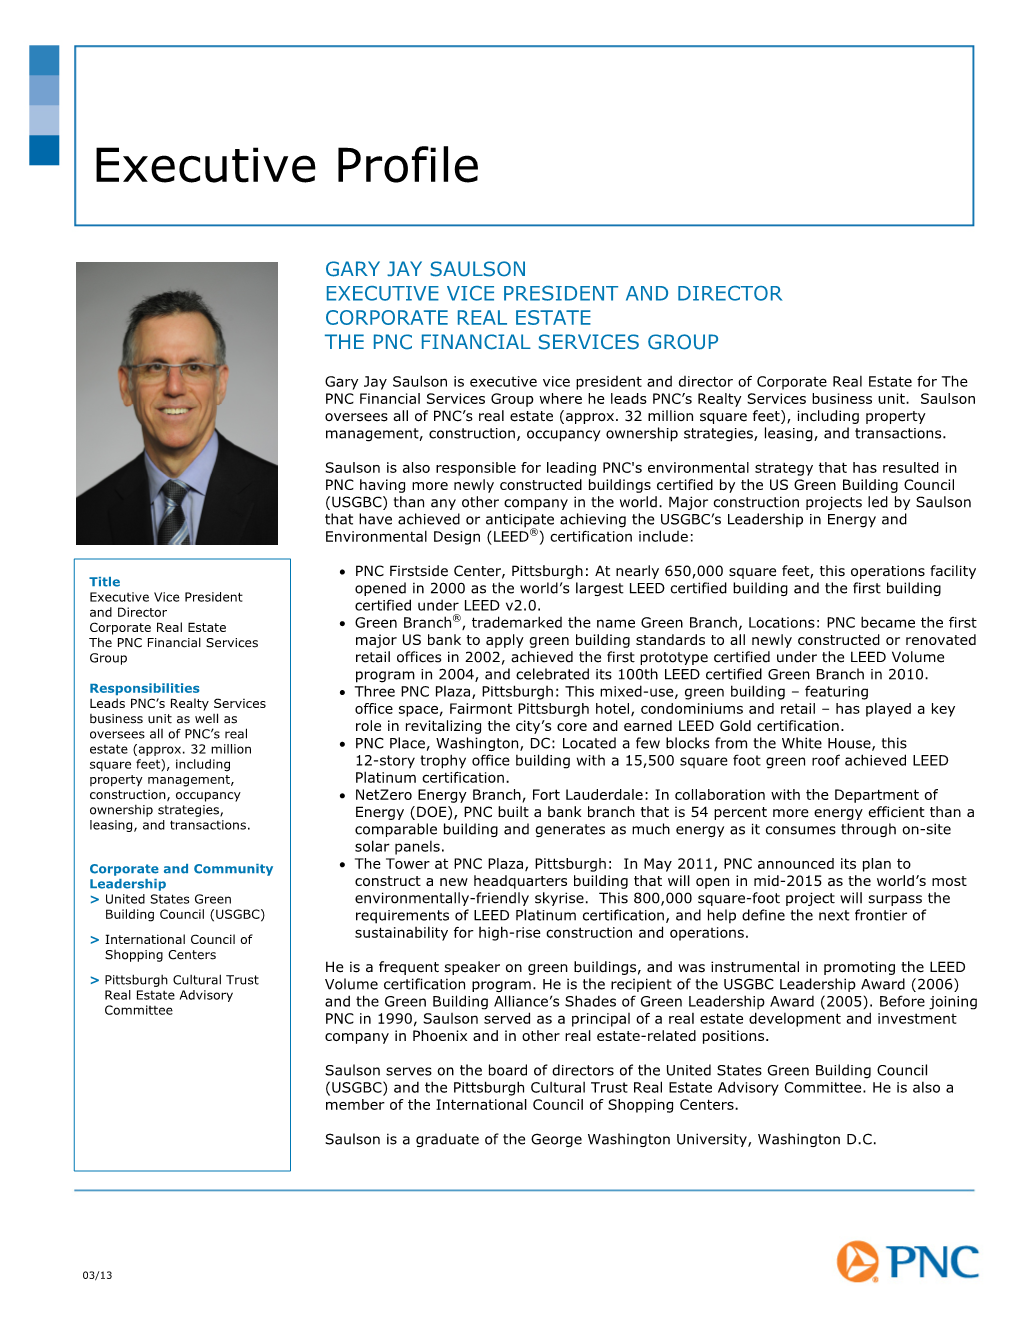 Gary's Executive Profile